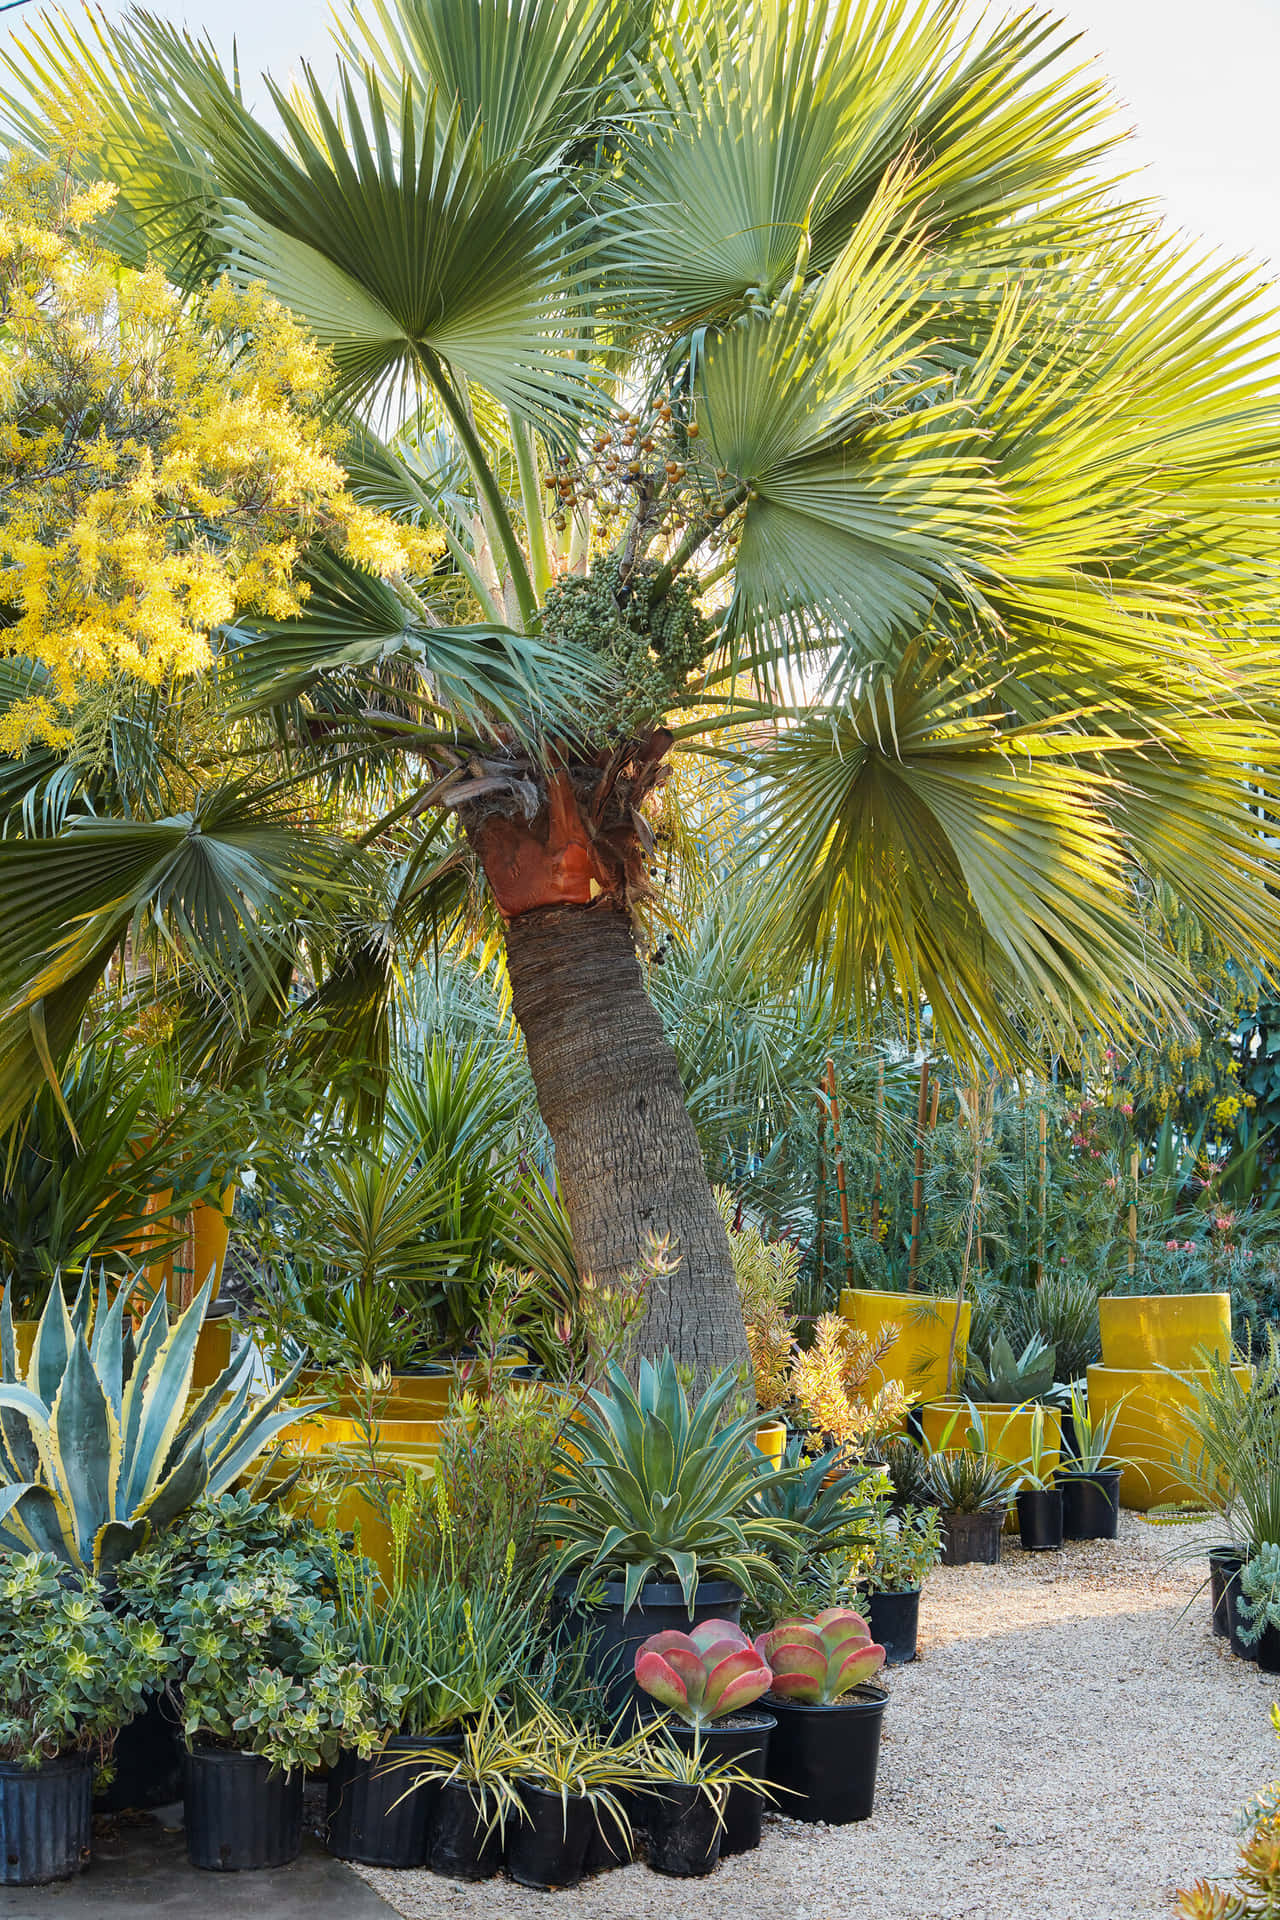 a palm tree in a garden